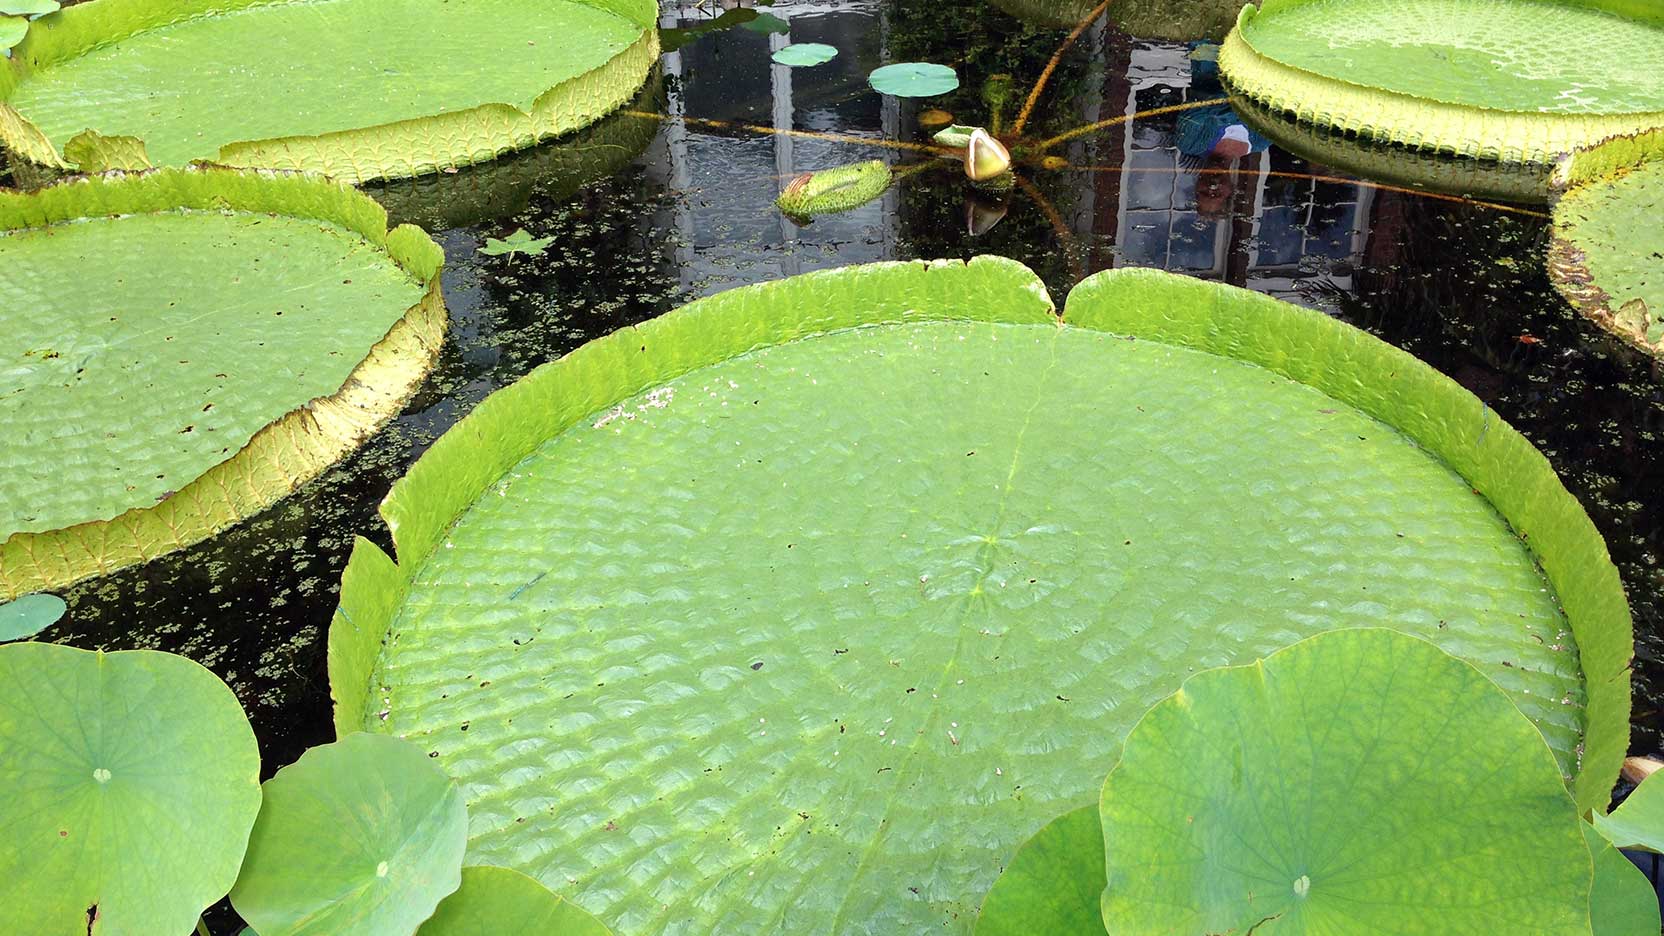 Hortus Botanicus, Amsterdam, Victoria amazonica water lily